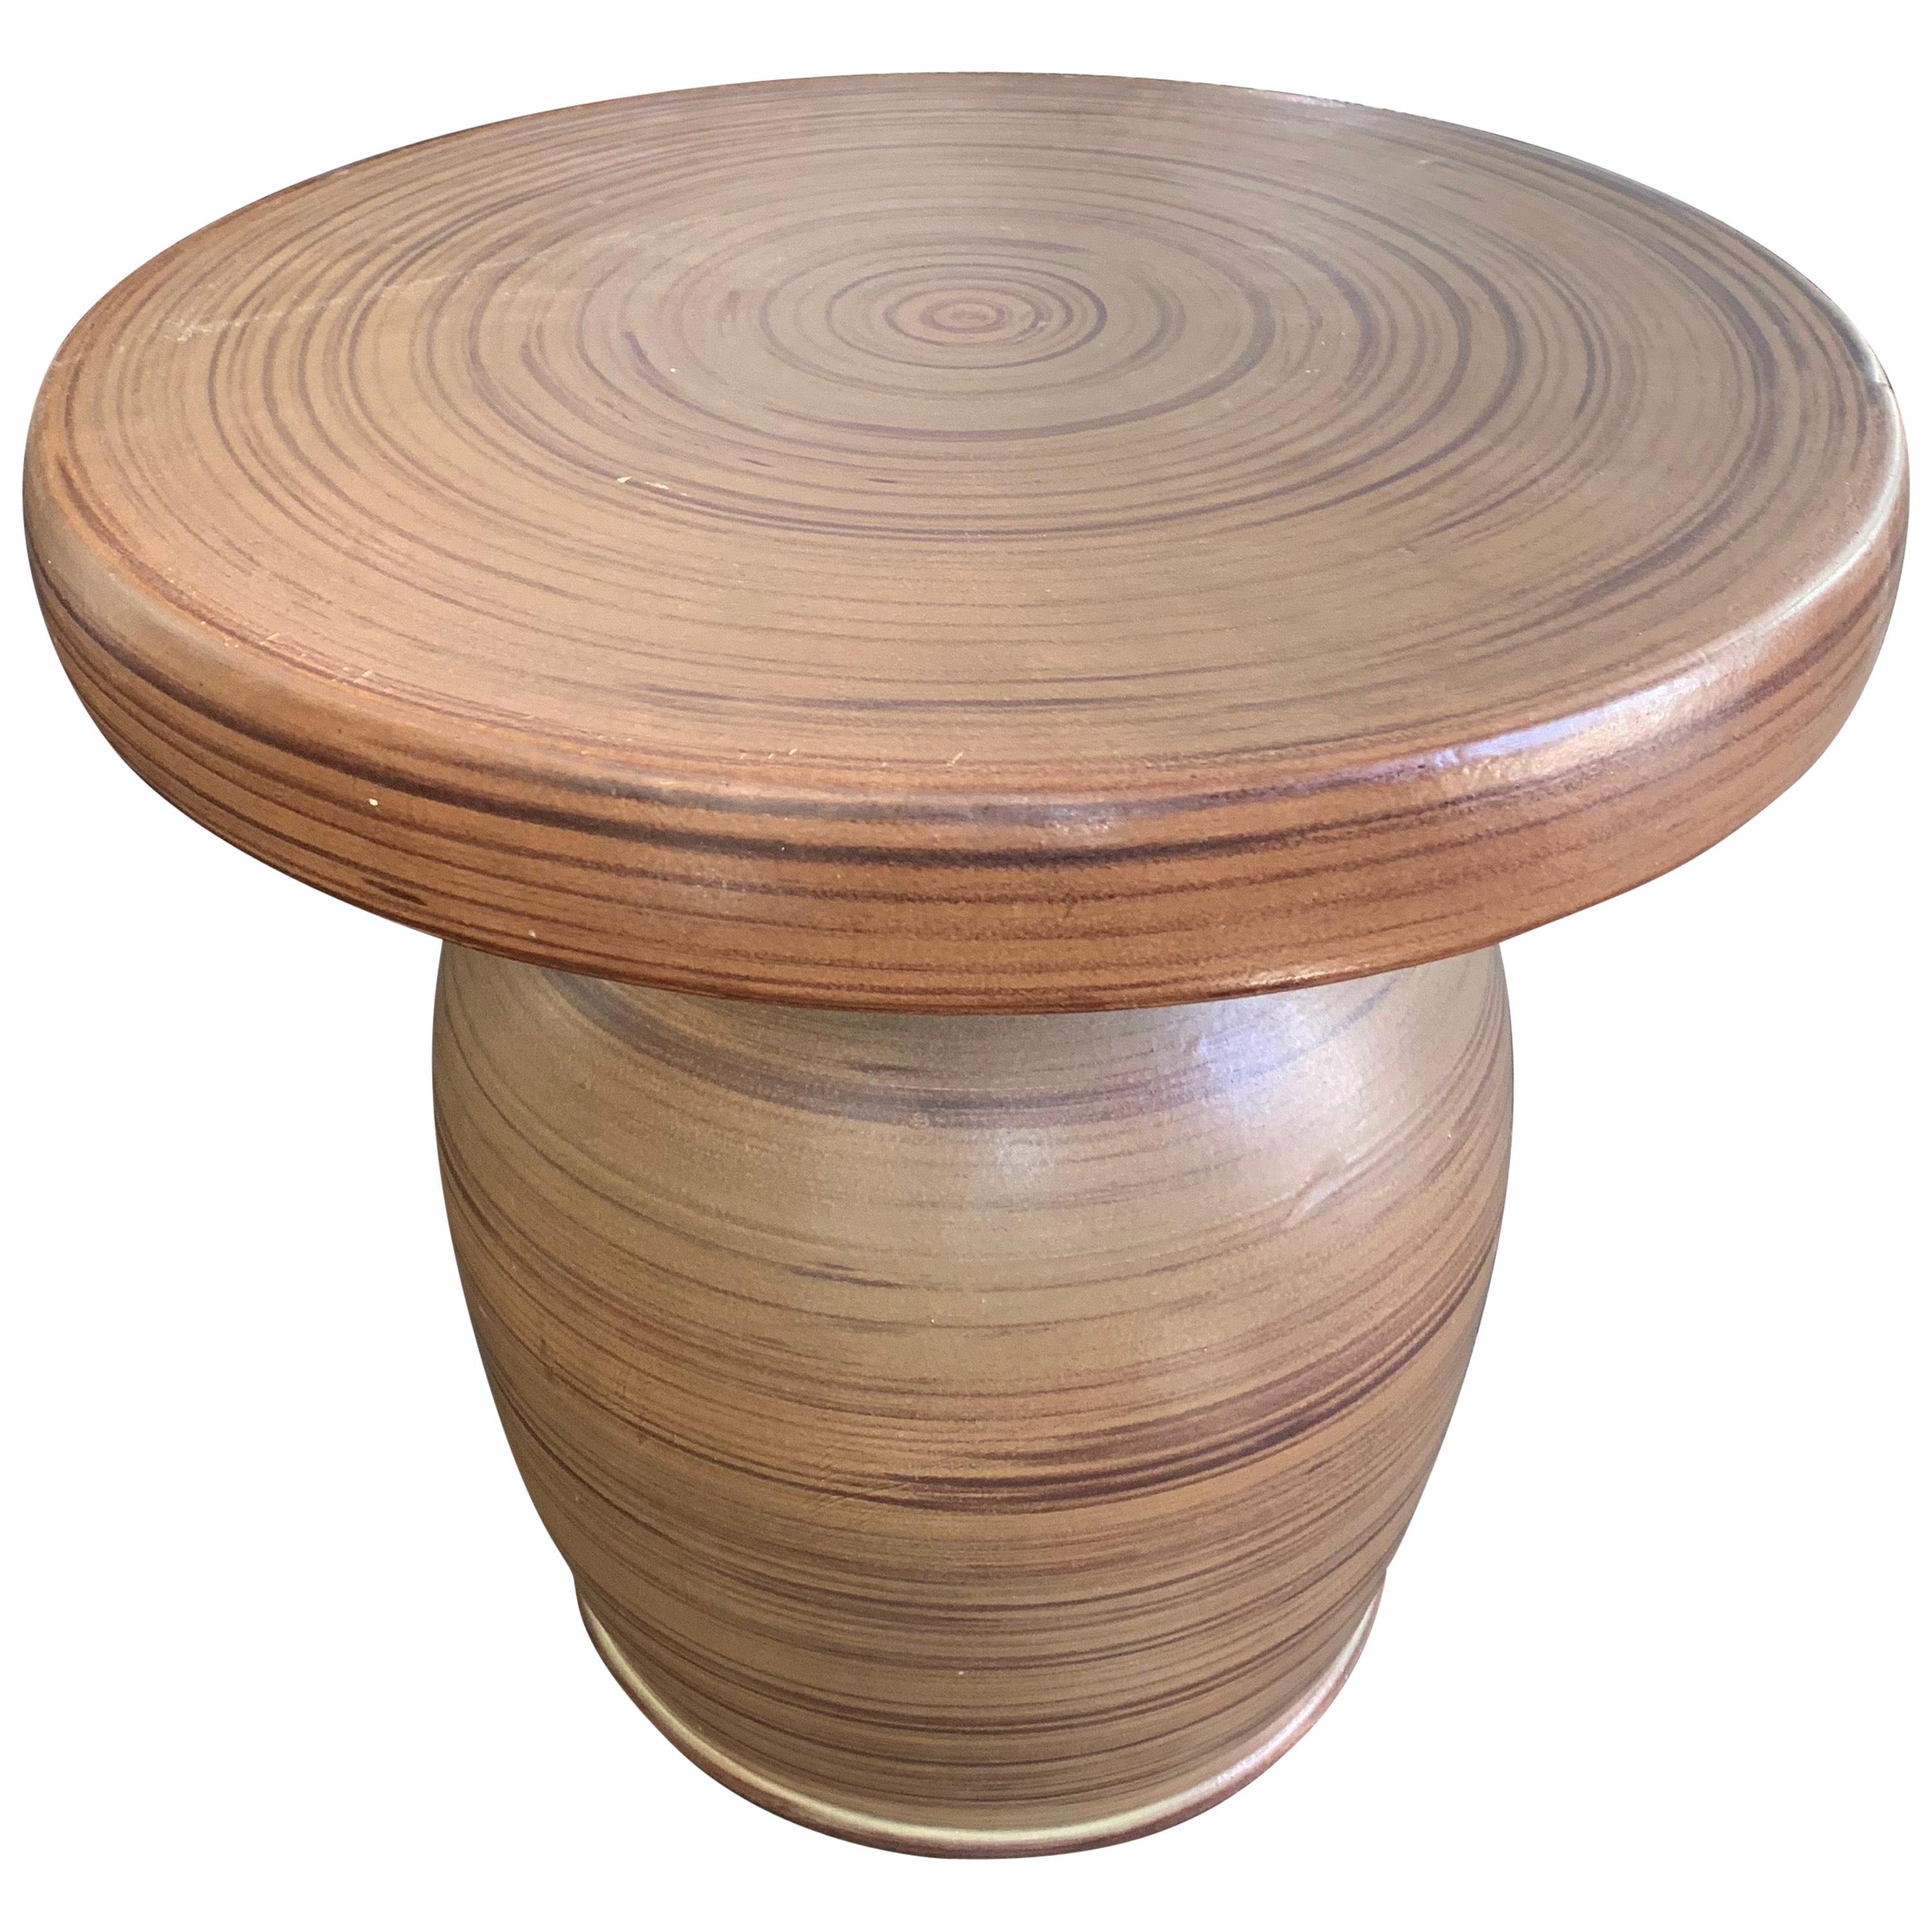 California Glazed Ceramic Circular Side Table